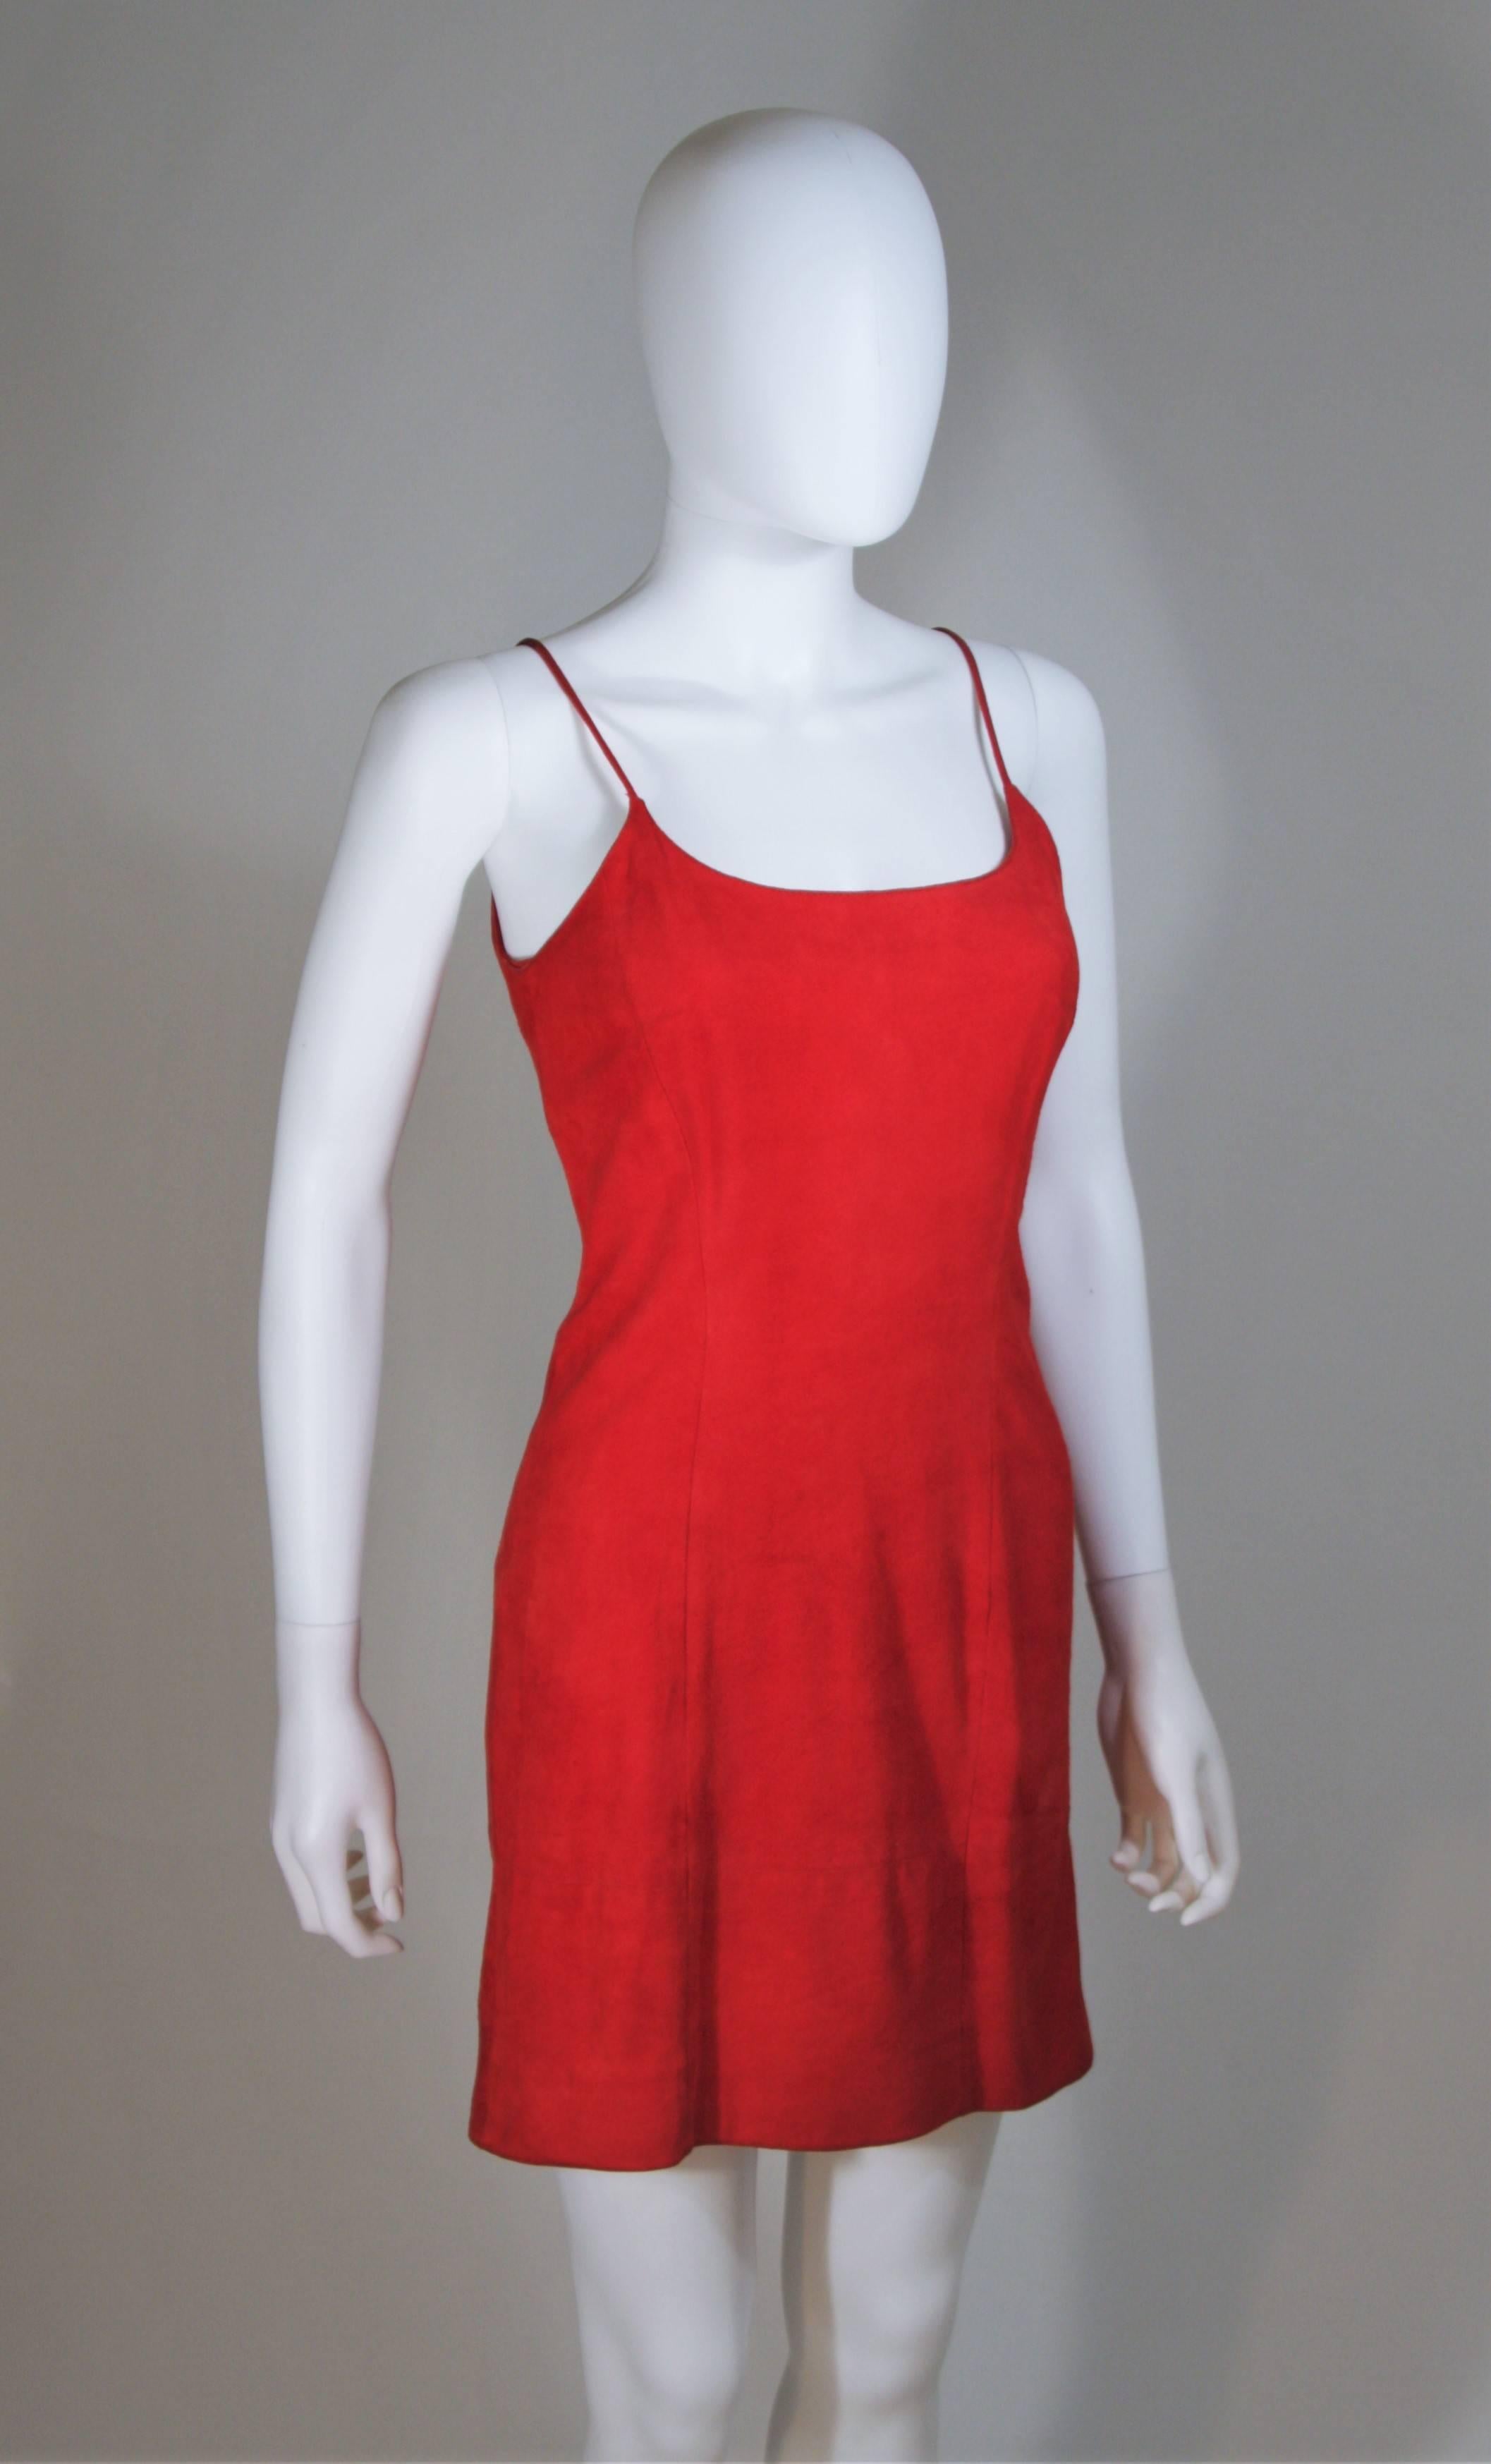 Women's GUCCI Red Suede Spaghetti Strap Dress Size 4-6